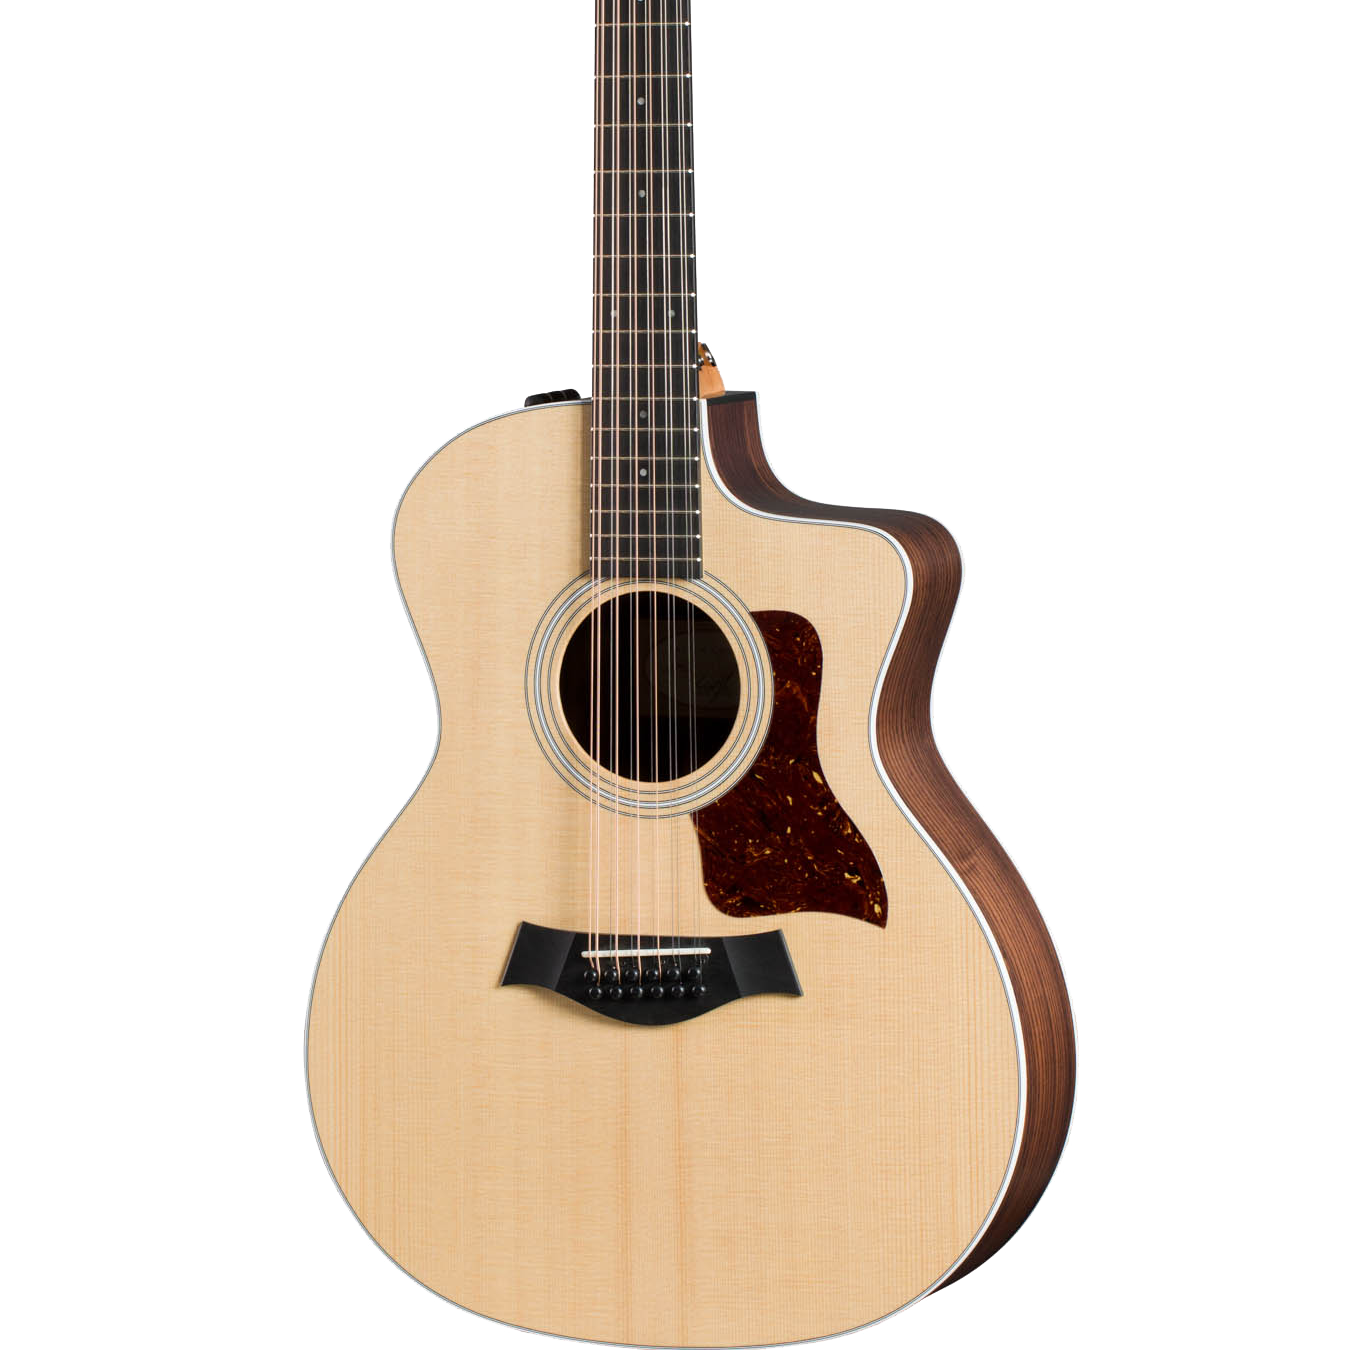 Taylor 254ce 12-string Acoustic Guitar body Tone Shop Guitars Dallas Fort Worth TX